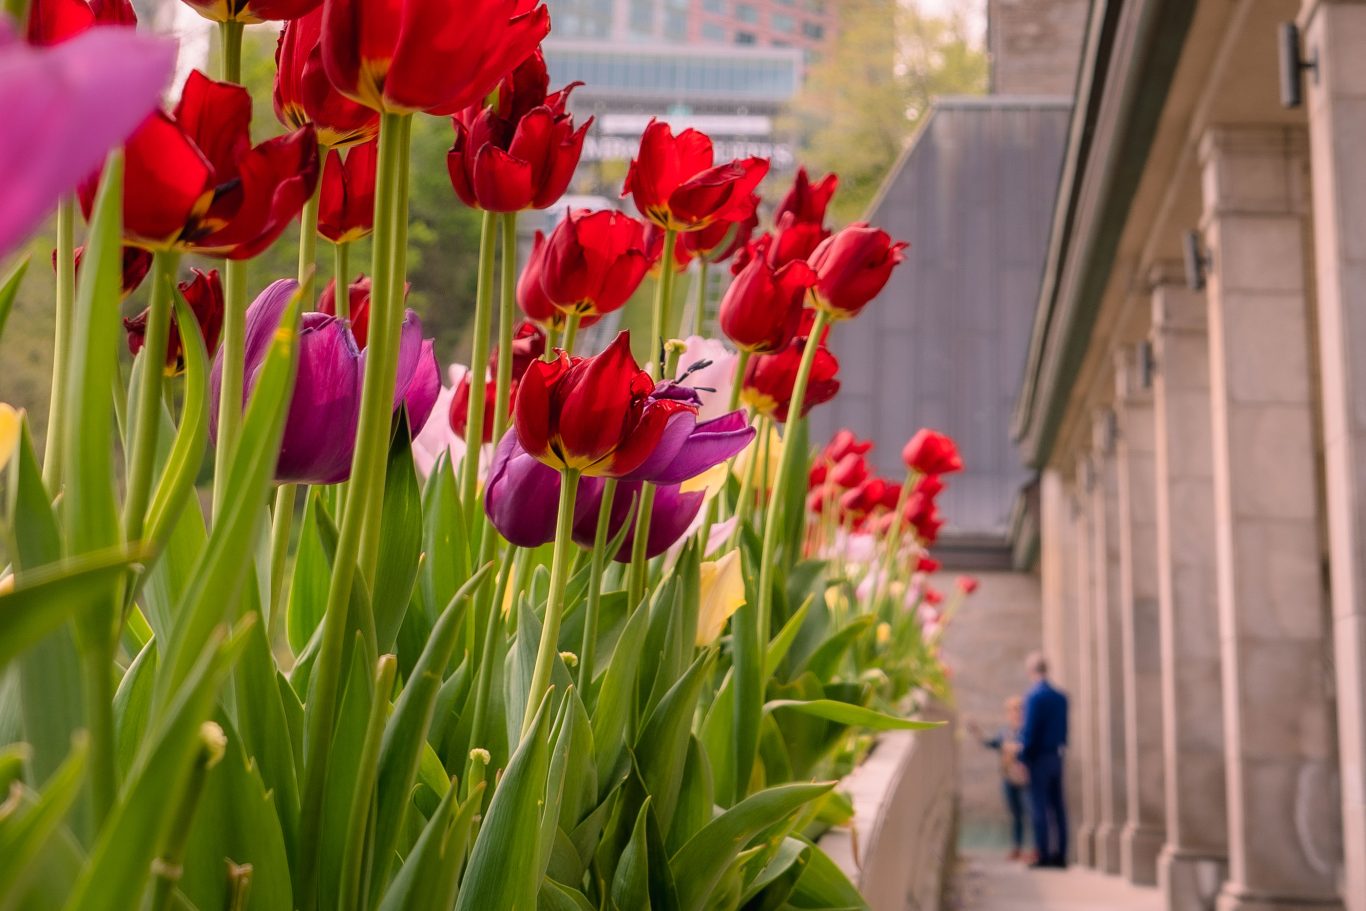 Niagara Falls Floral Blooms Tulips at Oakes Garden Theatre